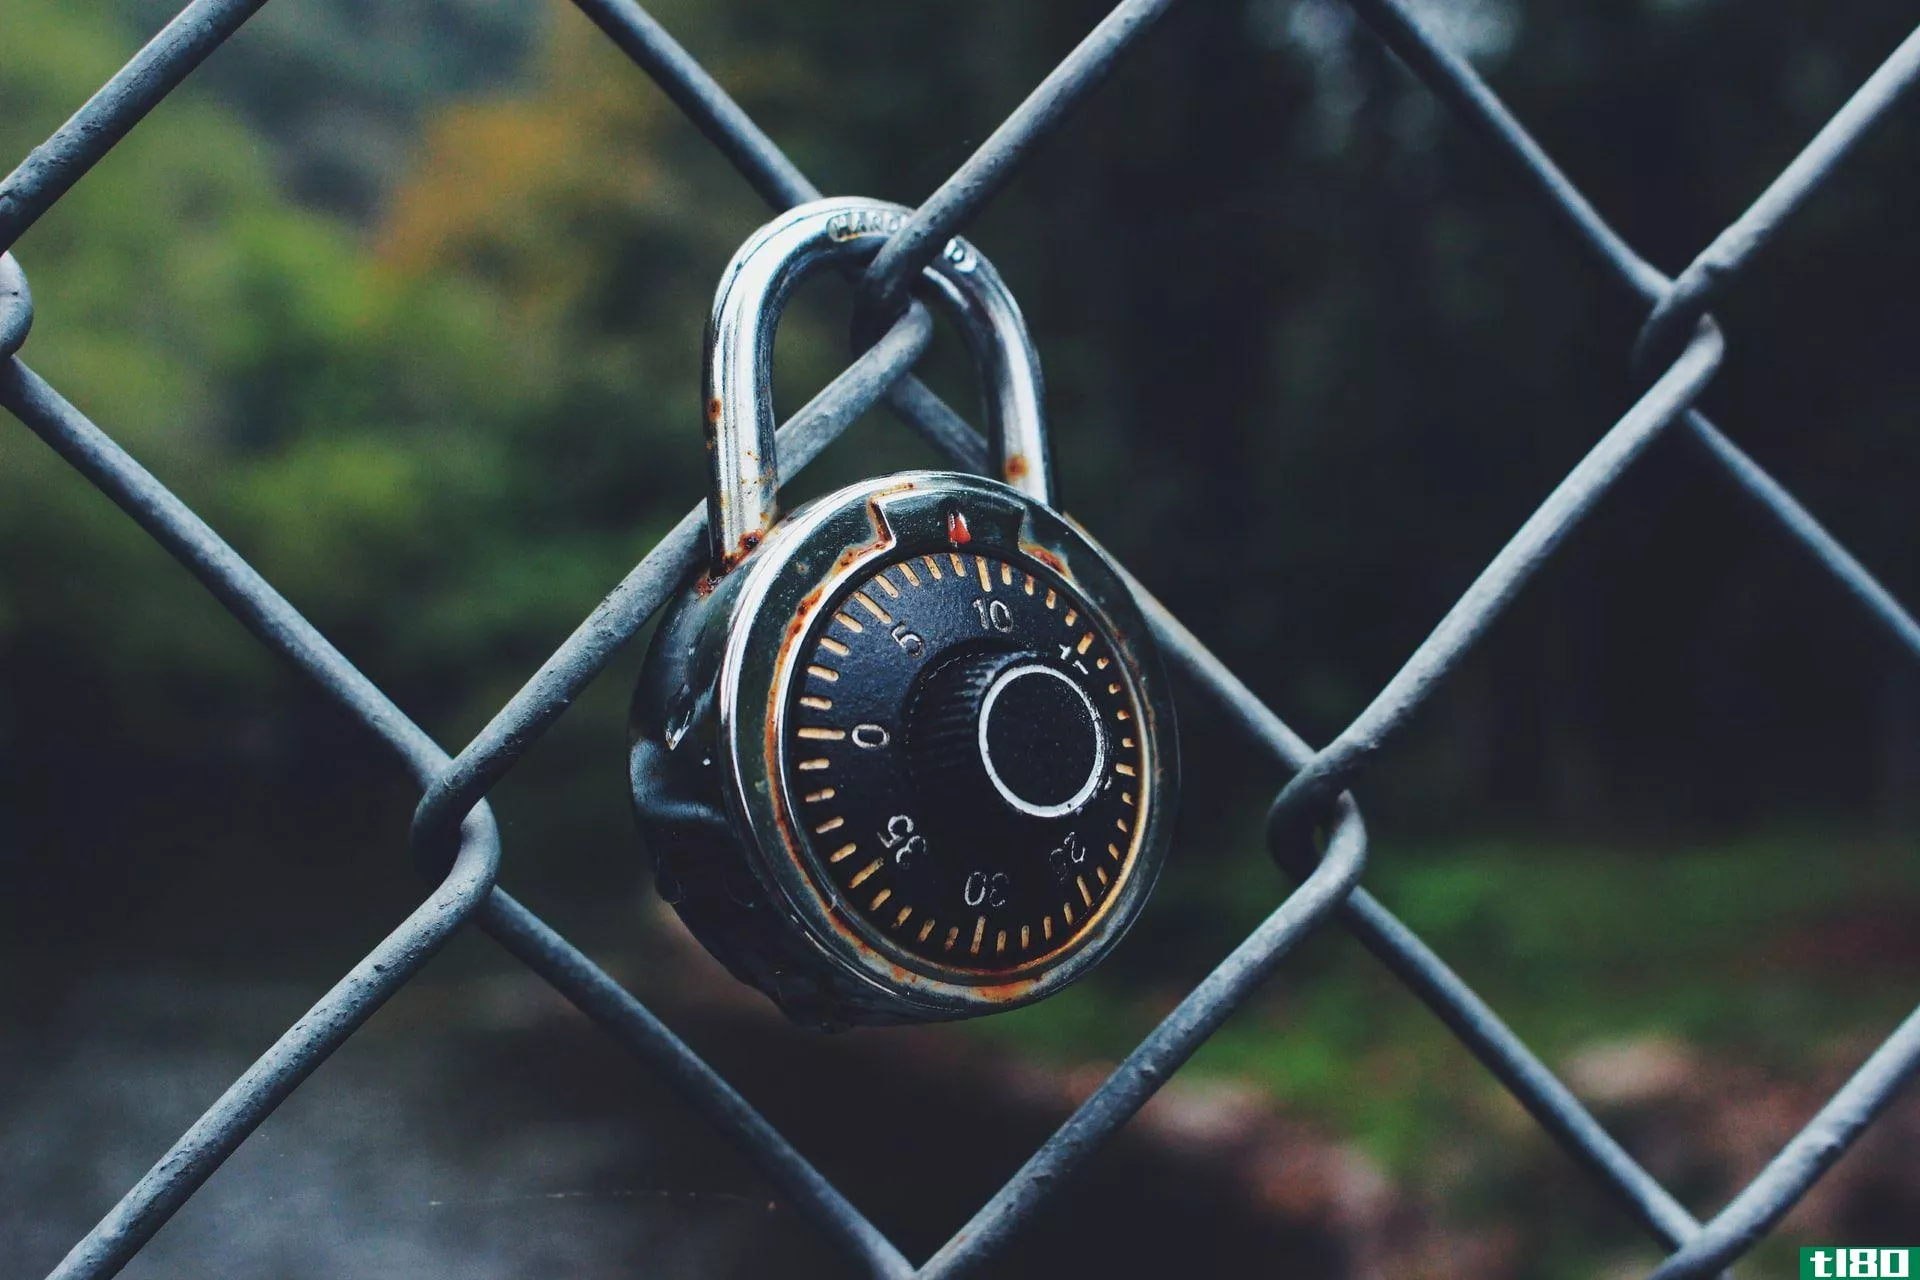 A sturdy lock on a fence